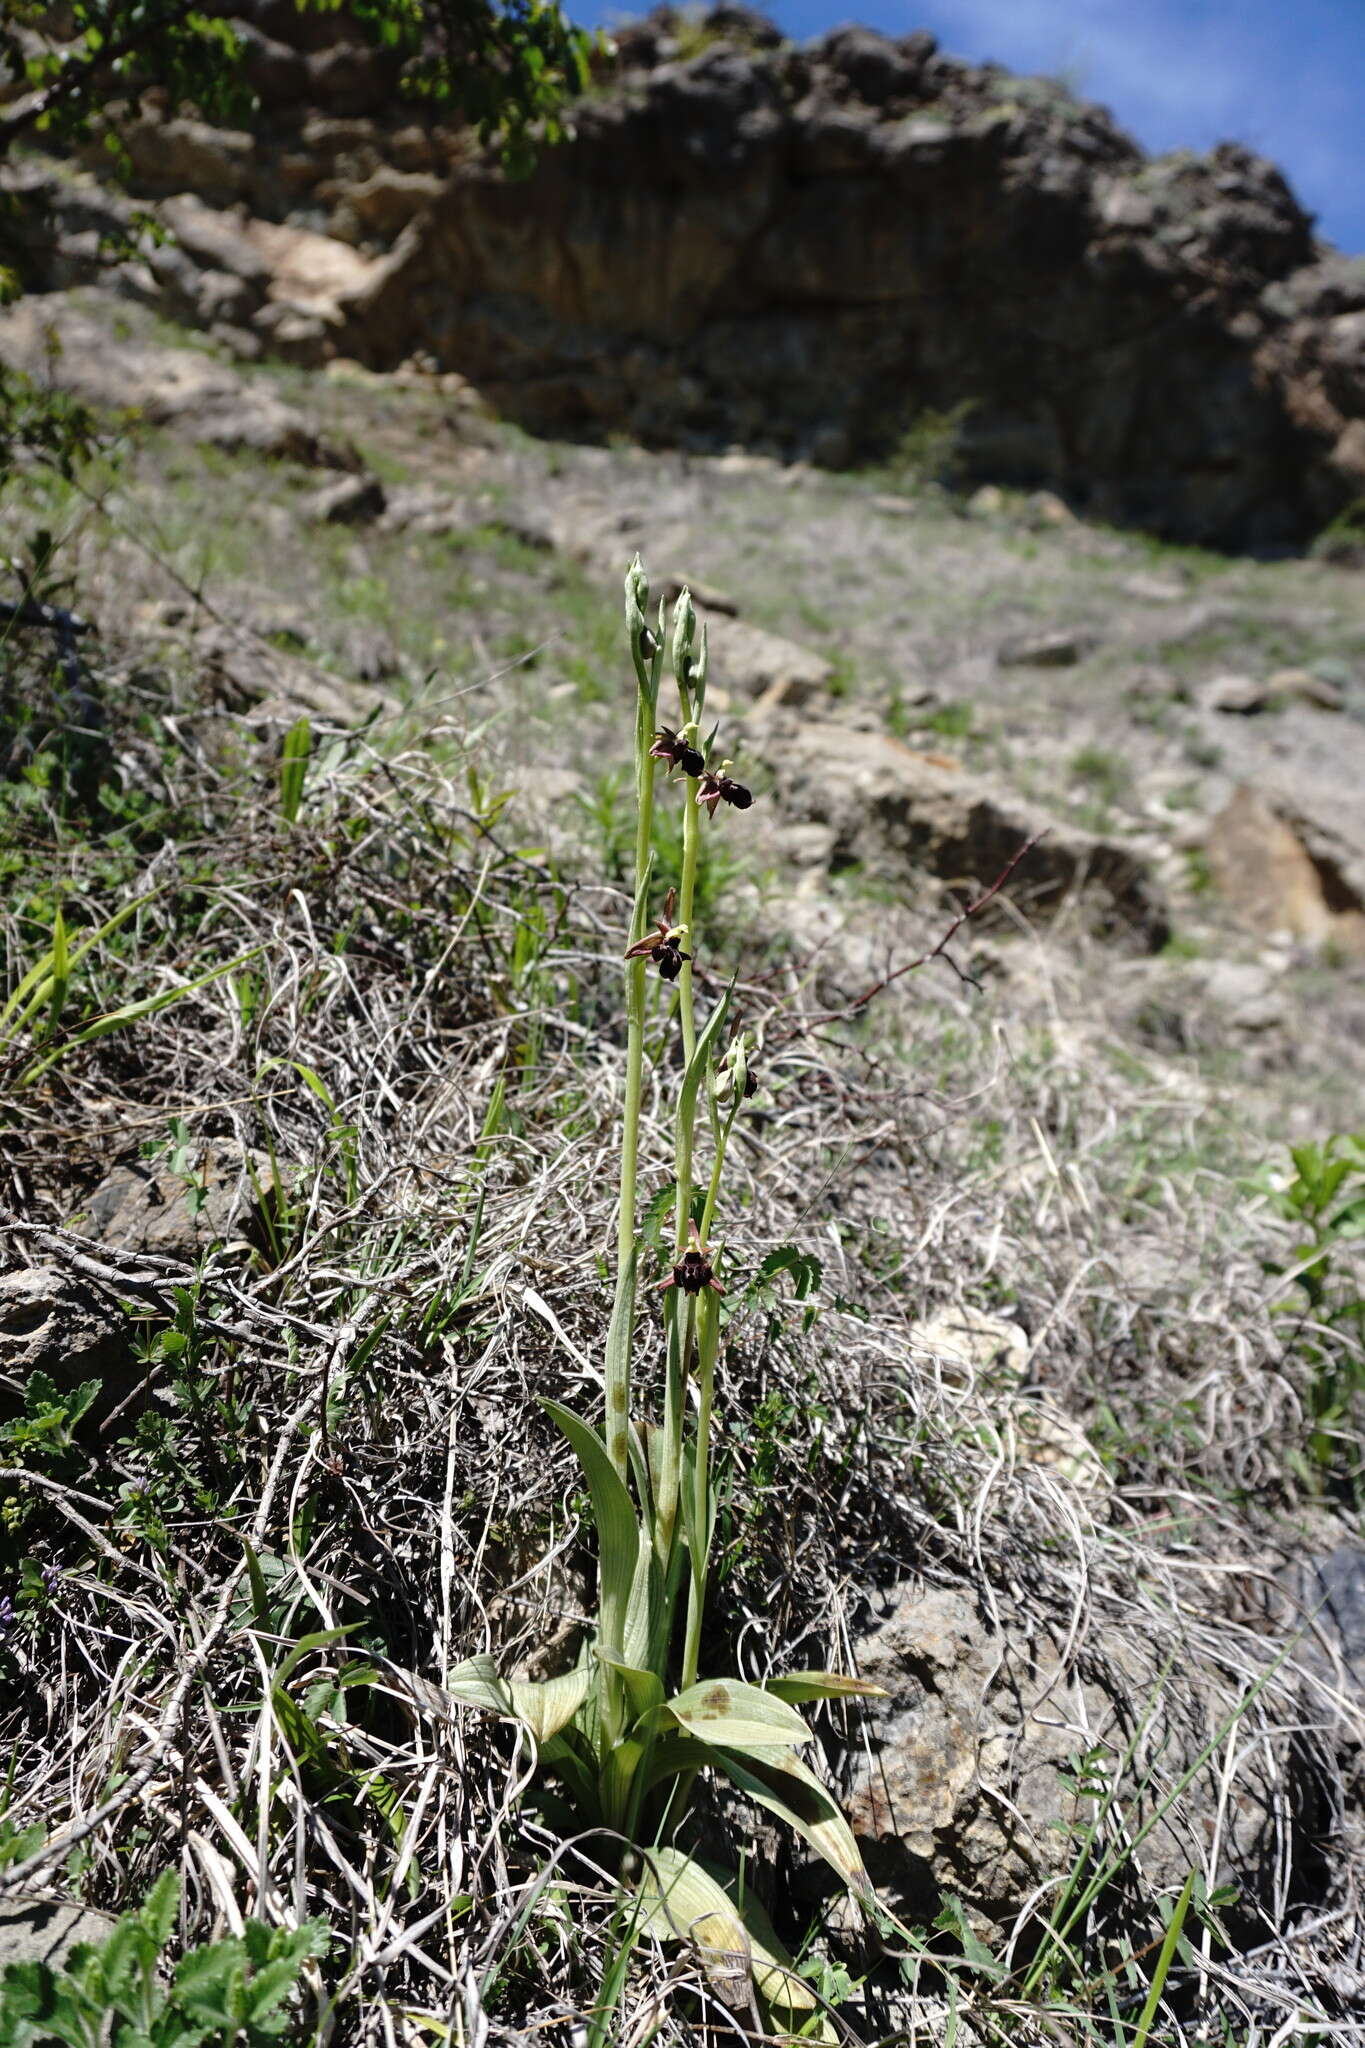 Image of <i>Ophrys aghemanii</i>